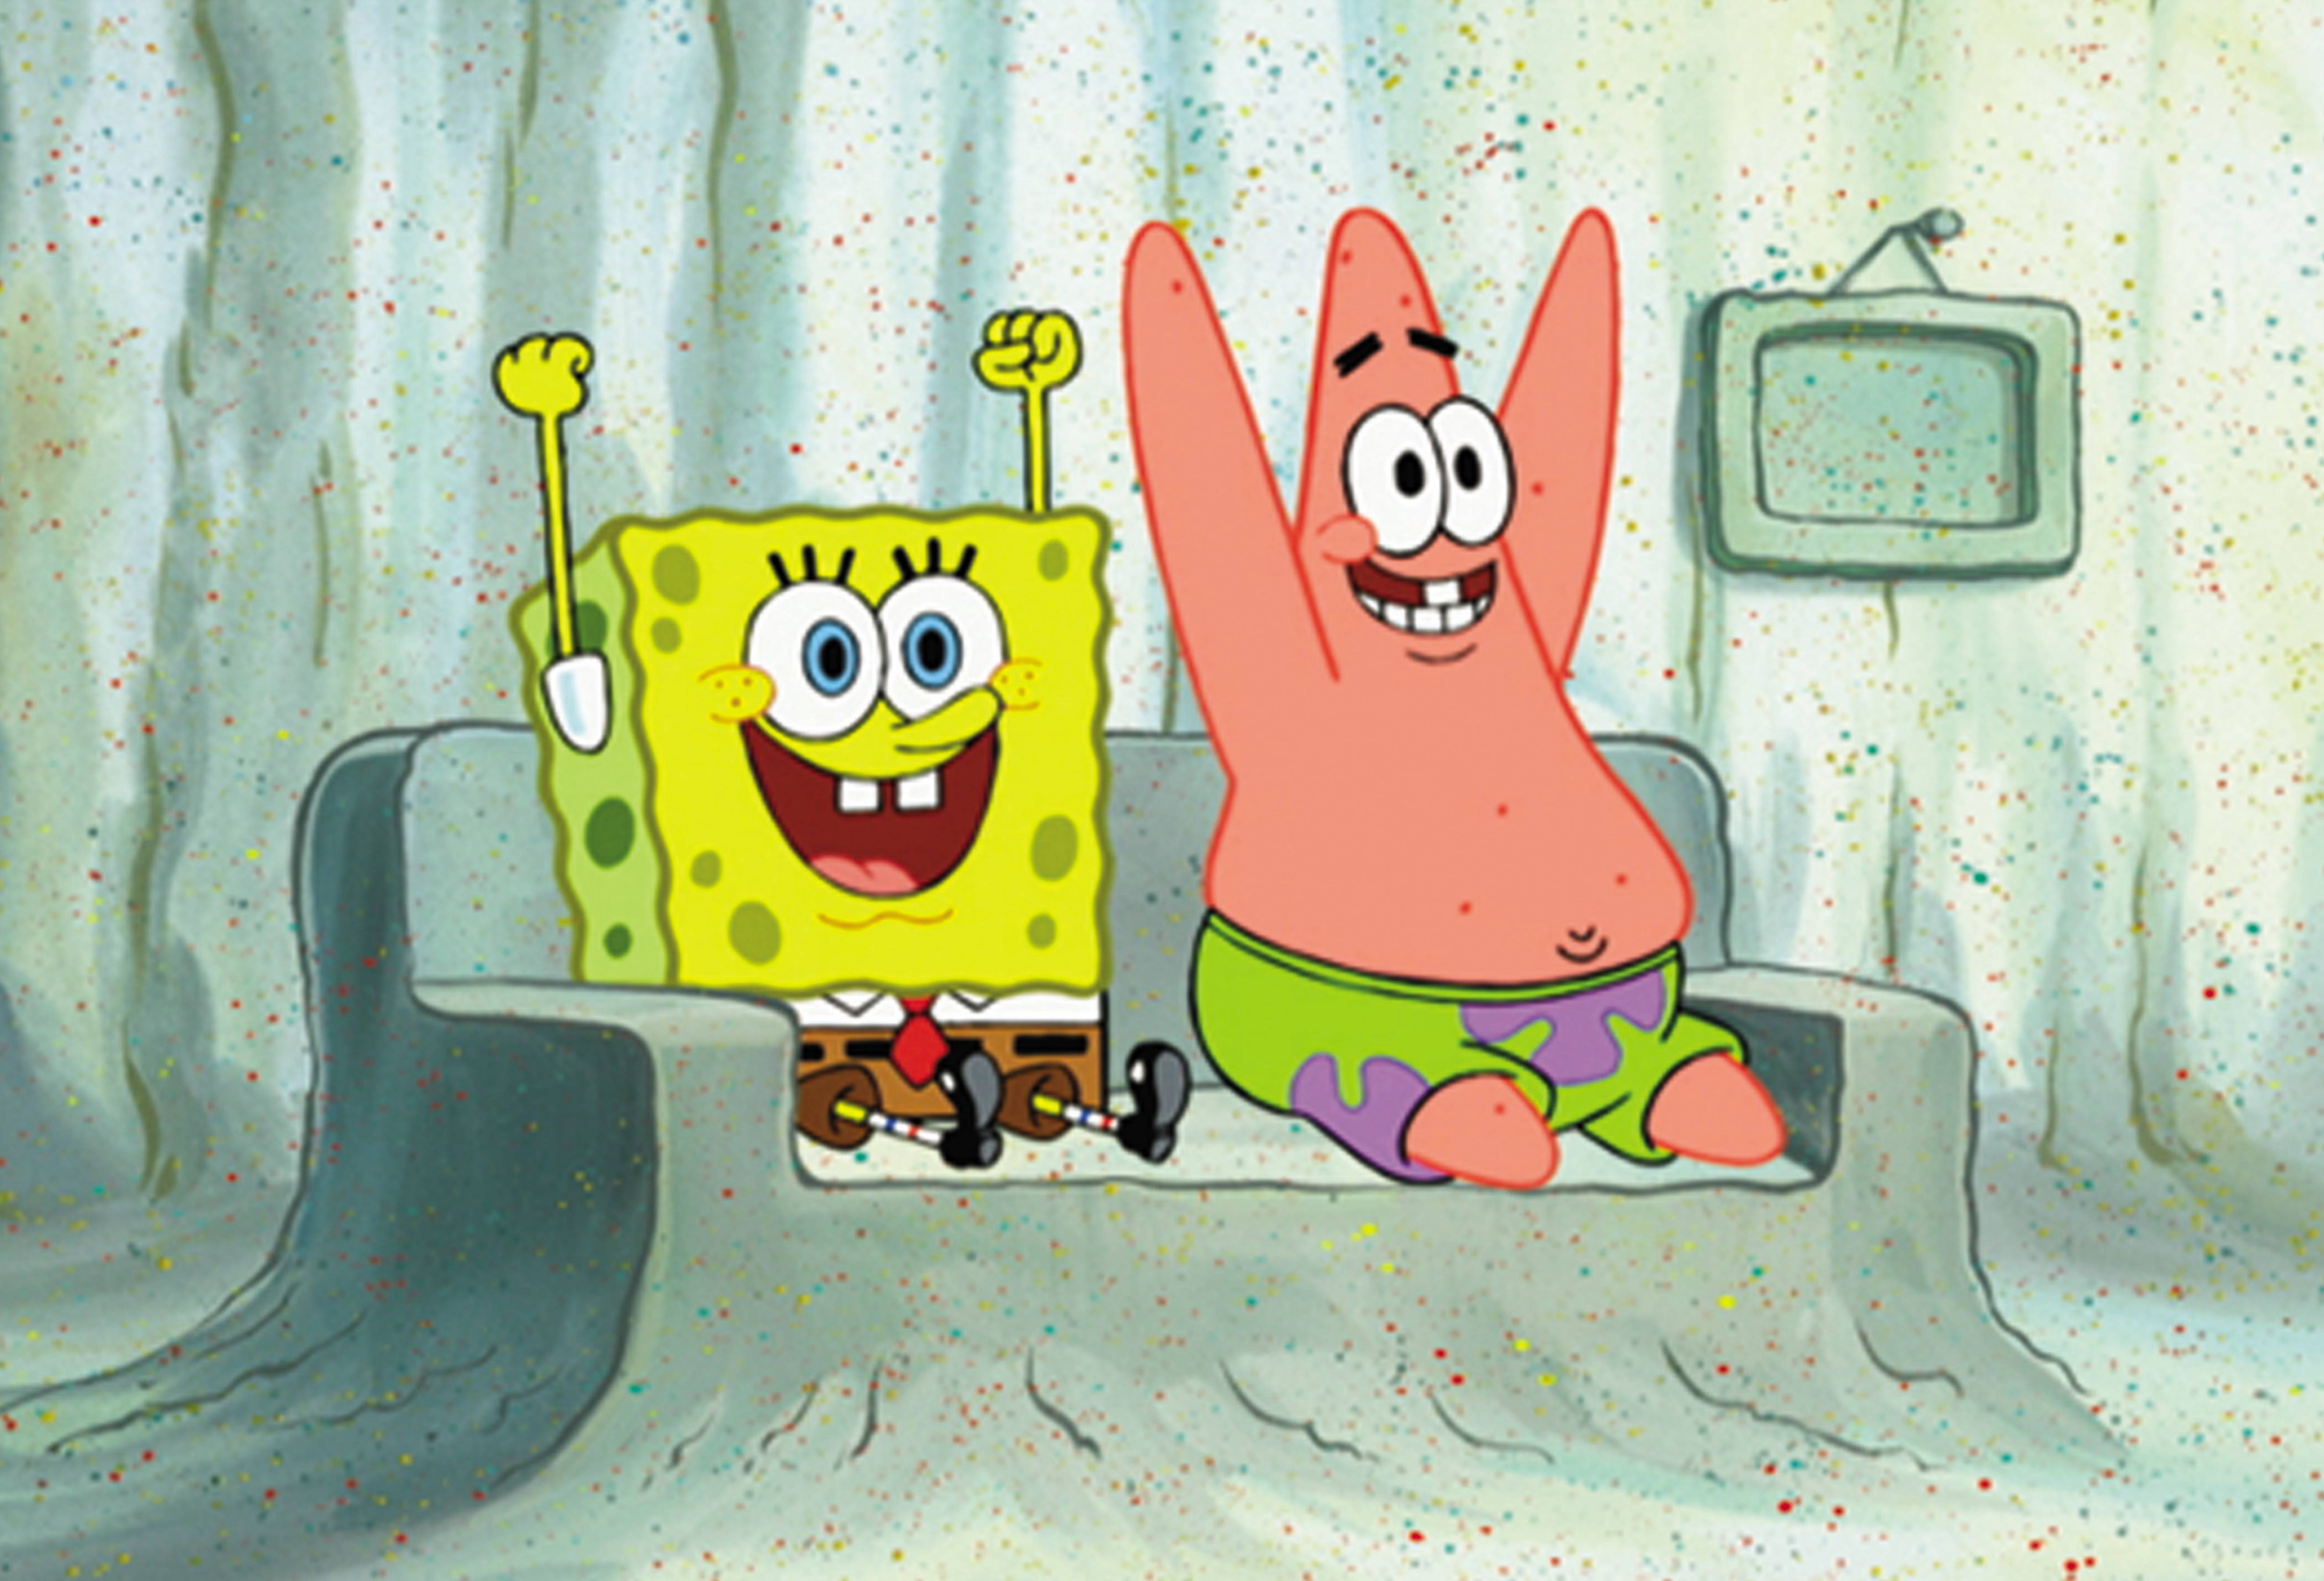 spongebob and patrick friendship quotes